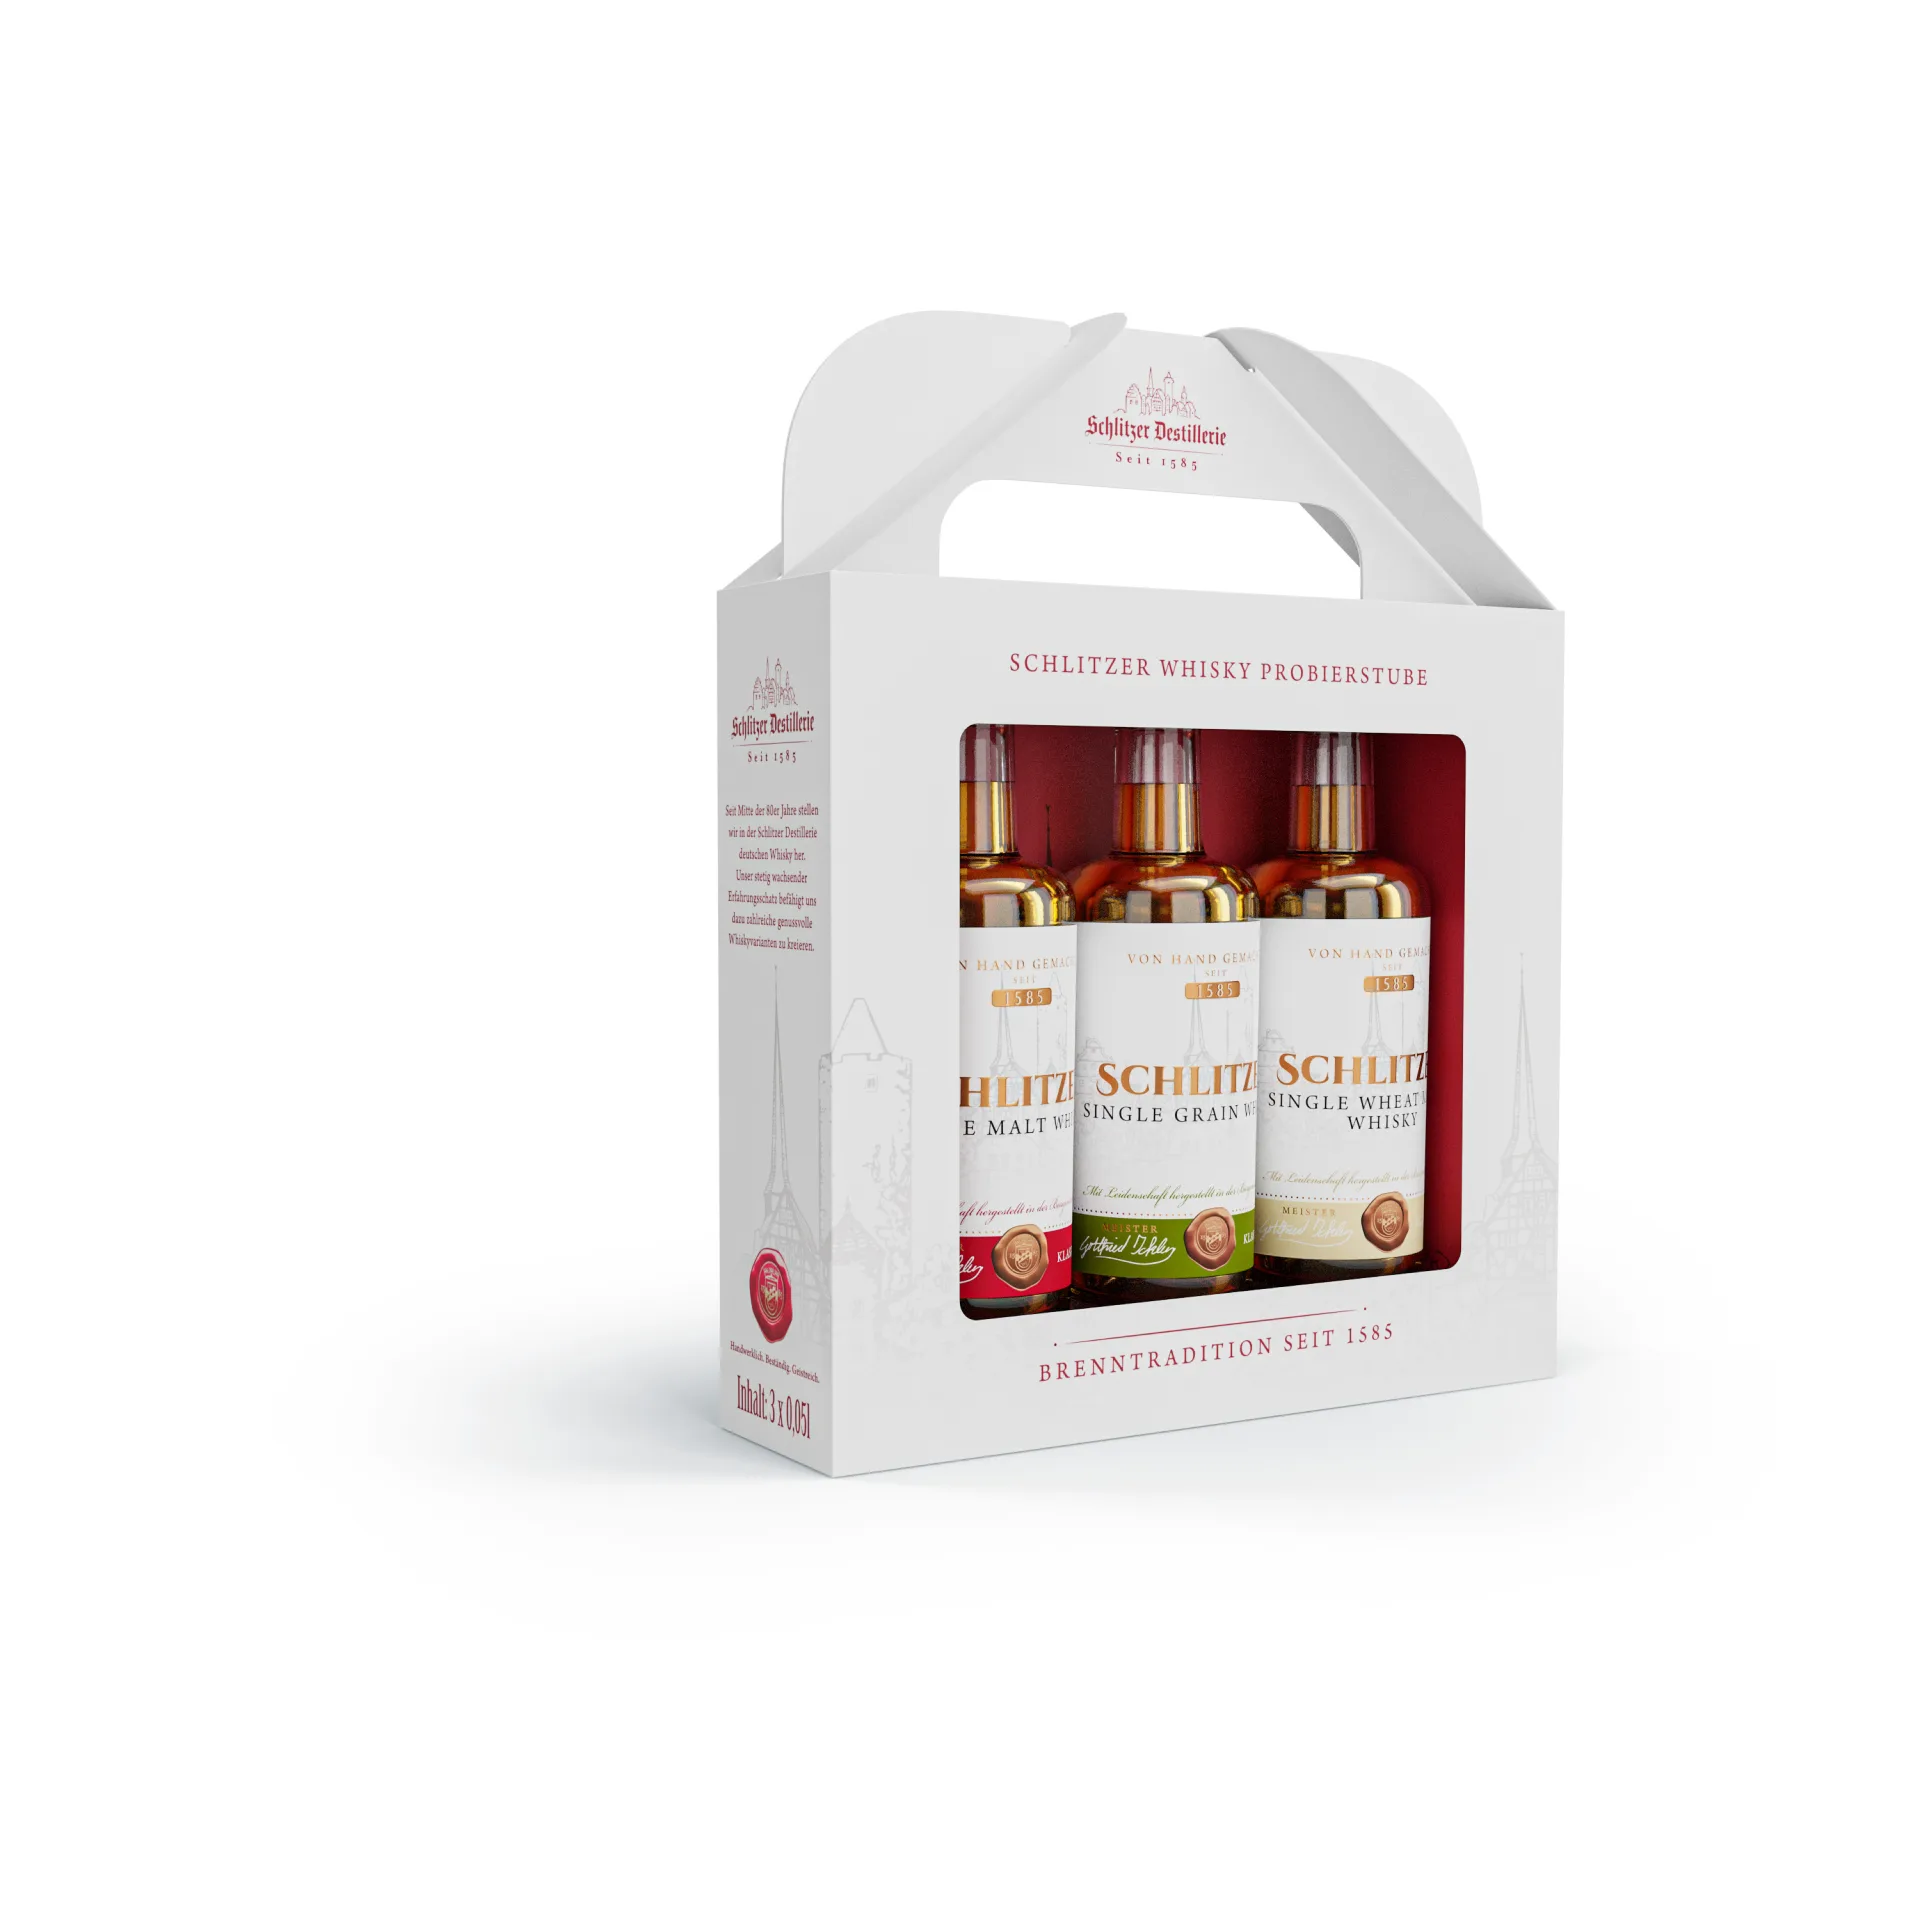 Whisky Tasting Box | Schlitzer Destillerie